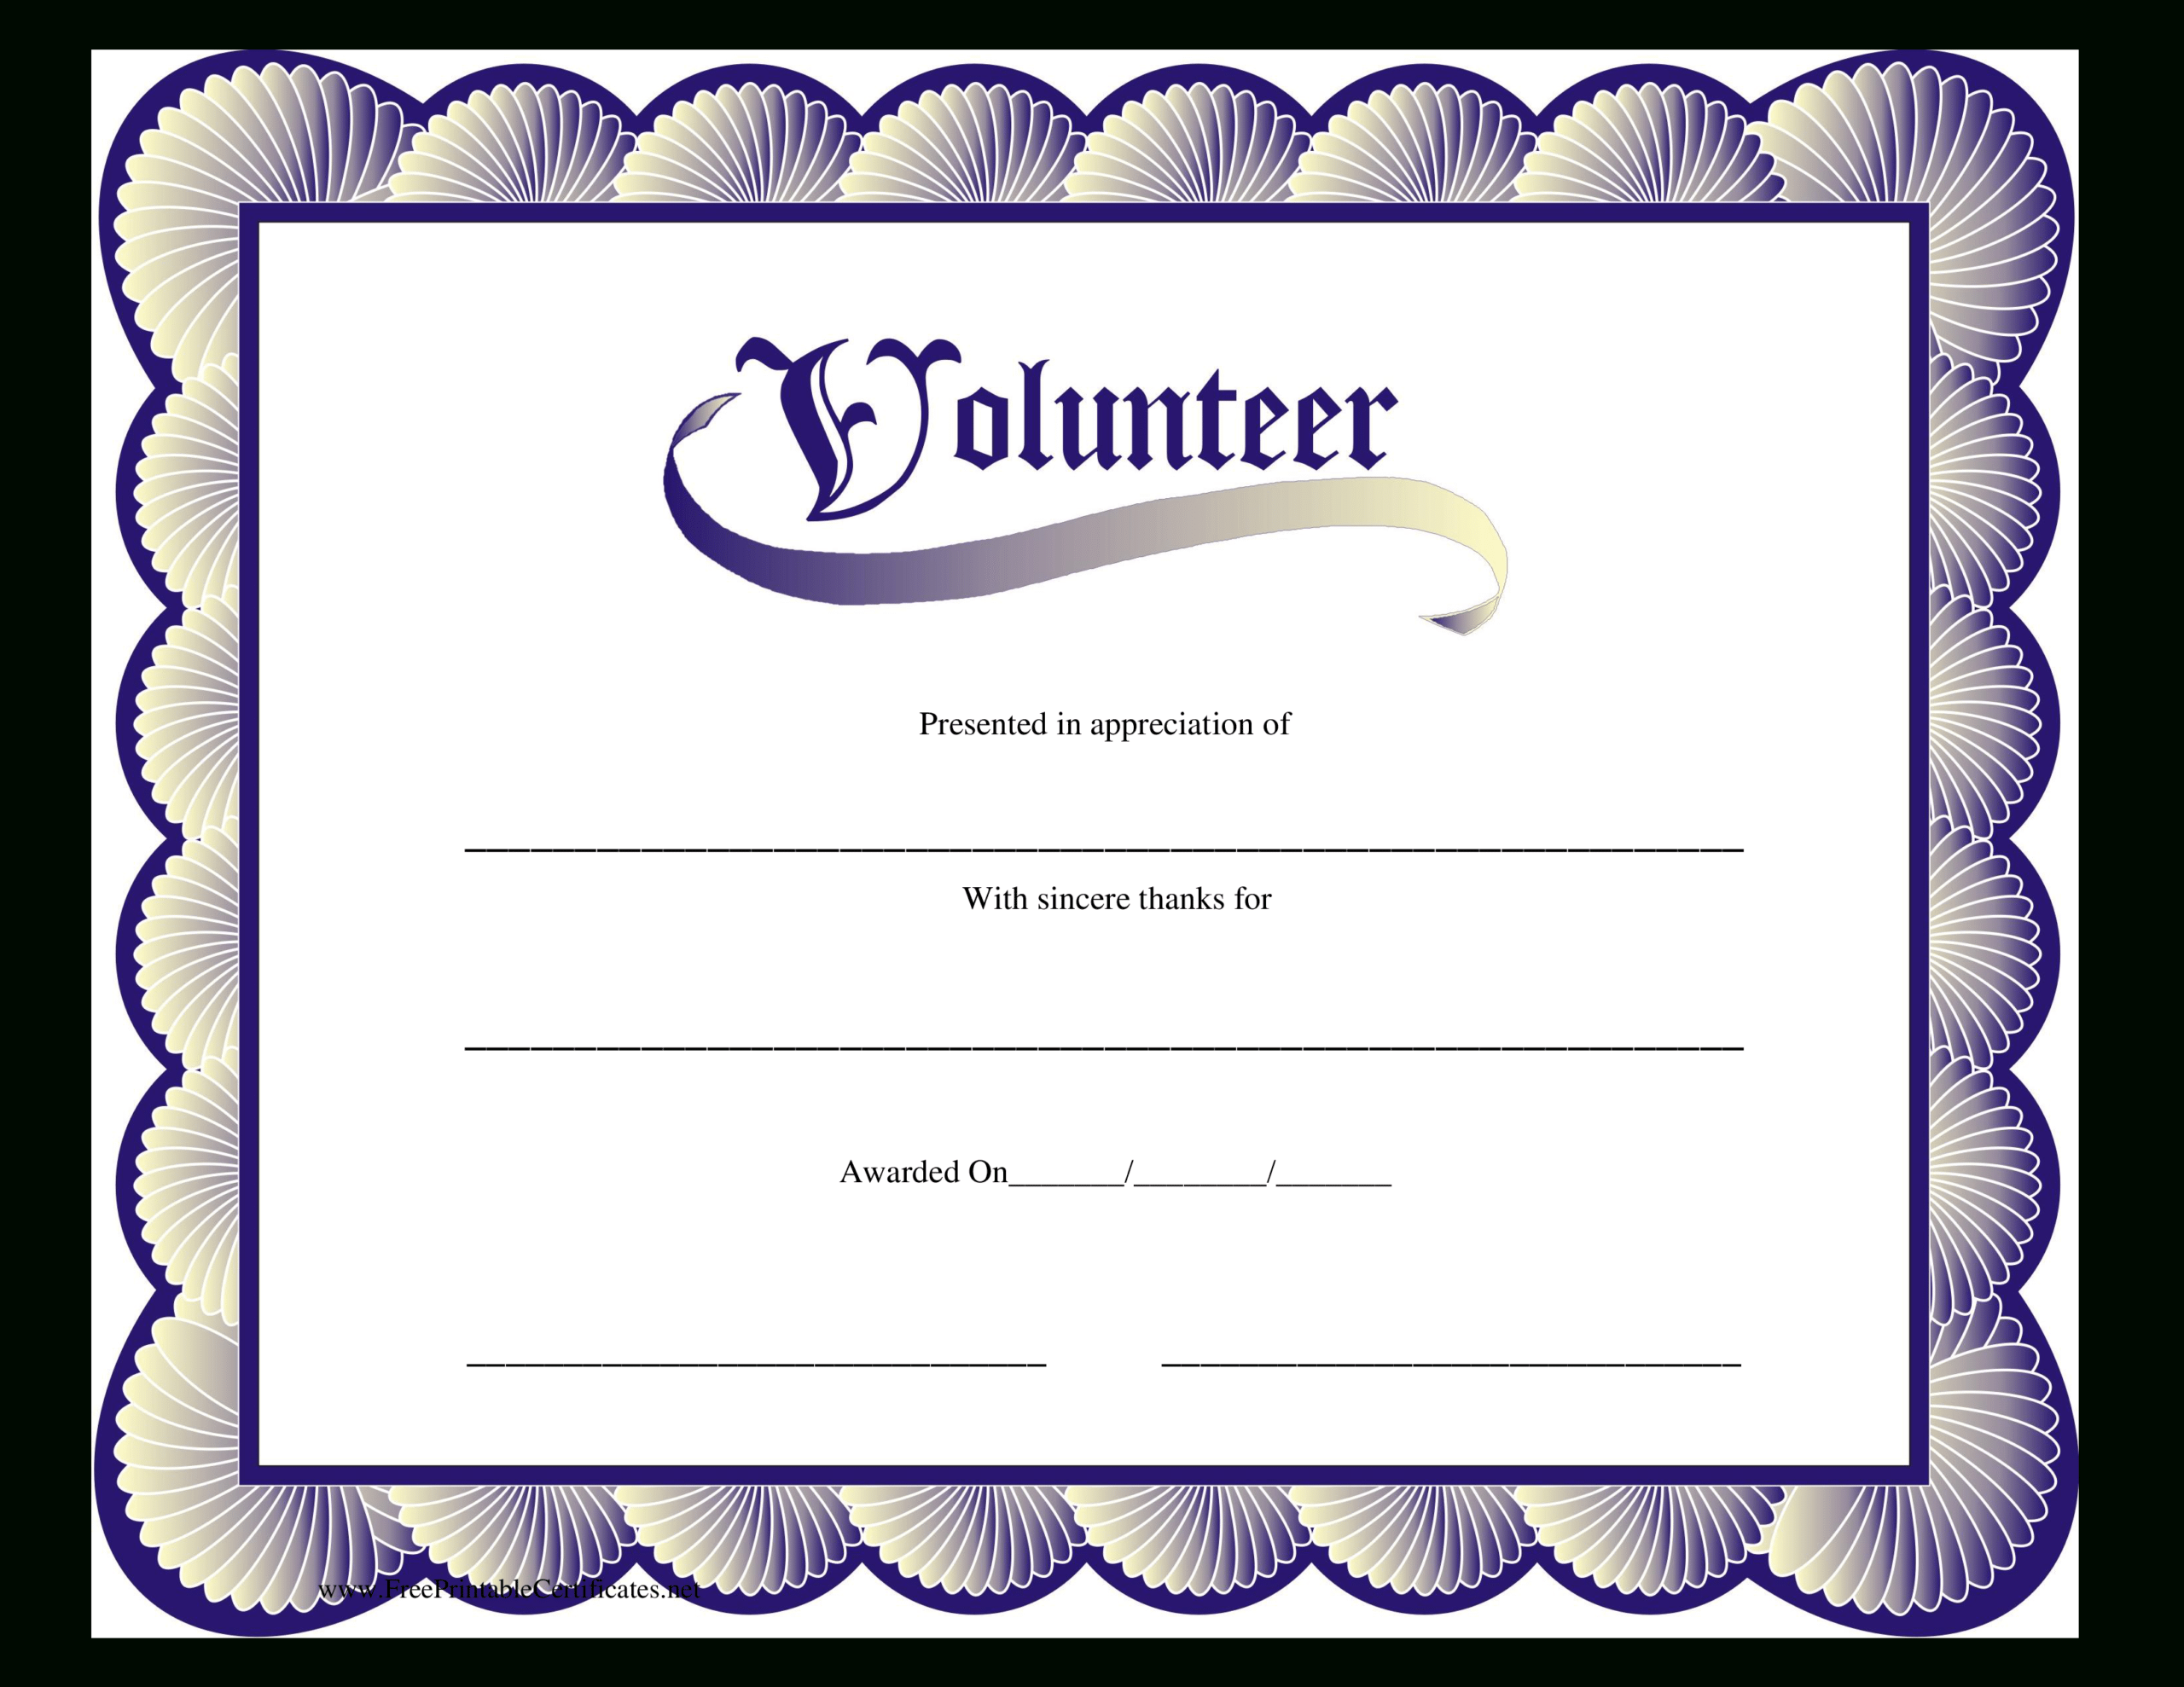 Volunteer Certificate | Templates At Allbusinesstemplates Intended For Volunteer Certificate Templates